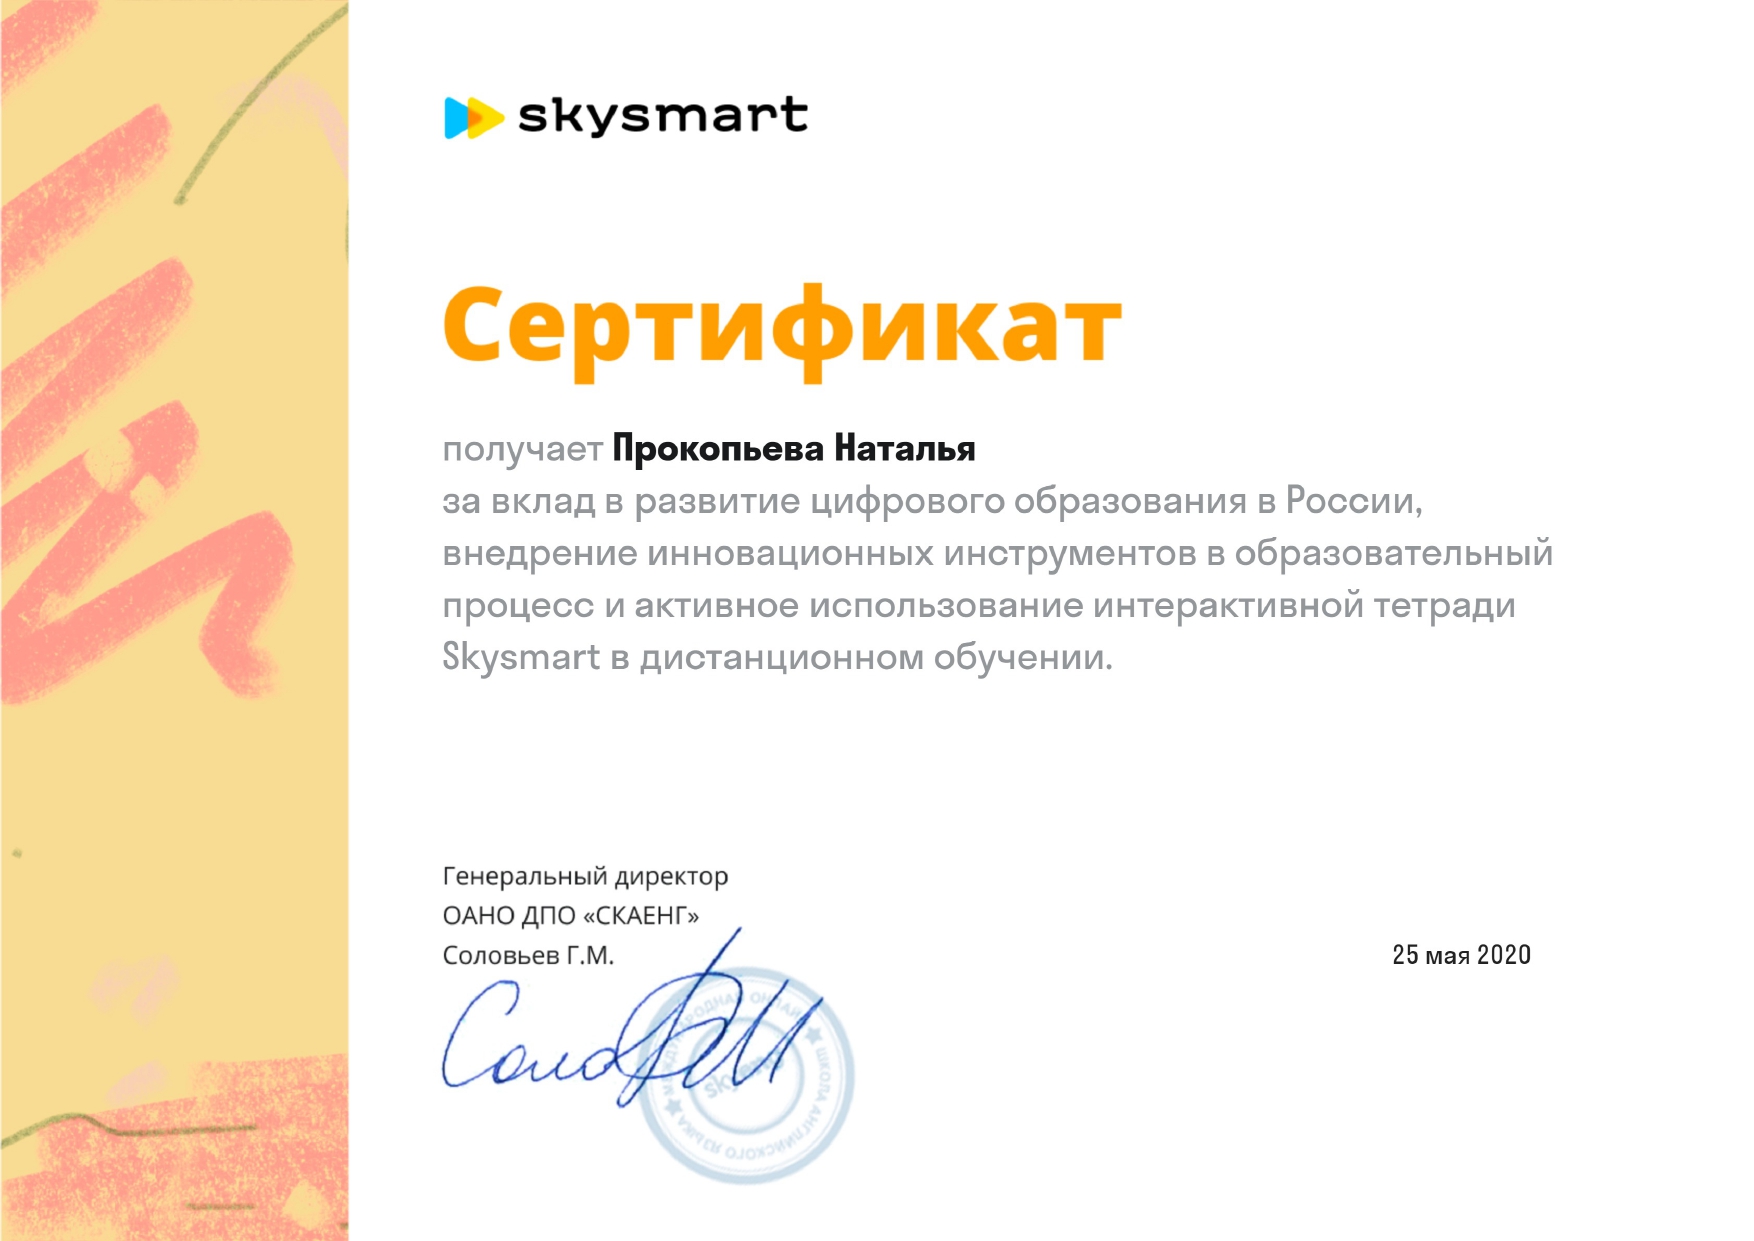 Сертификат SkysmartПРОКОПЬЕВА page 0001